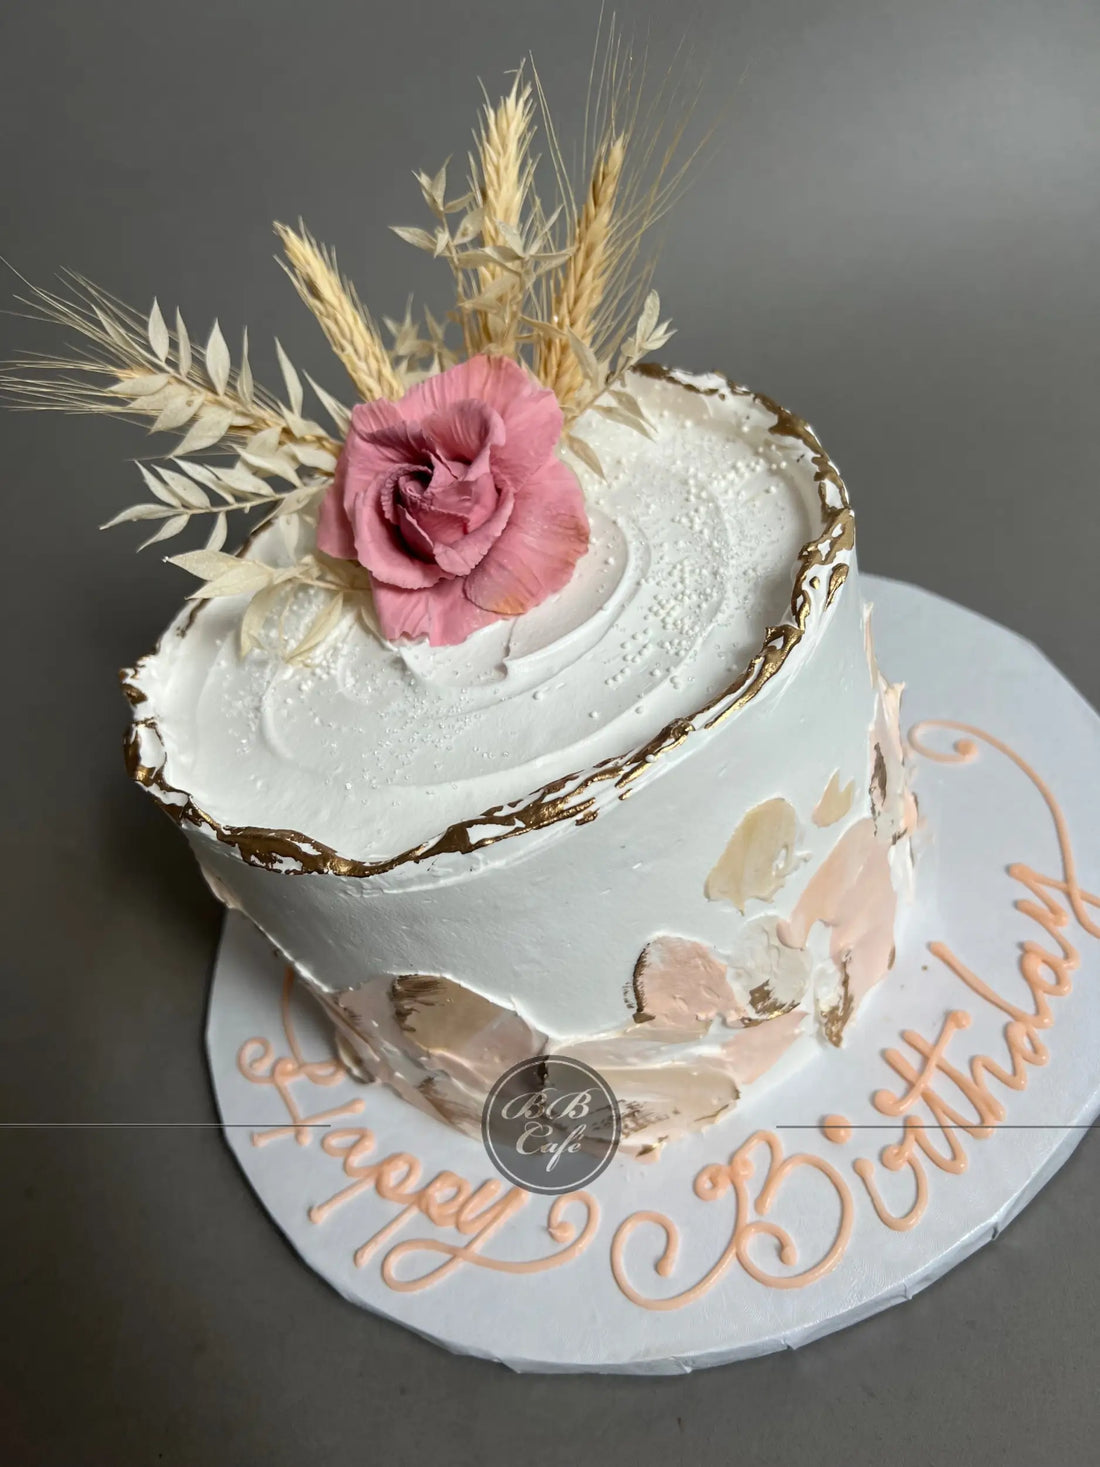 Abstract palette knife on whipped cream - custom cake